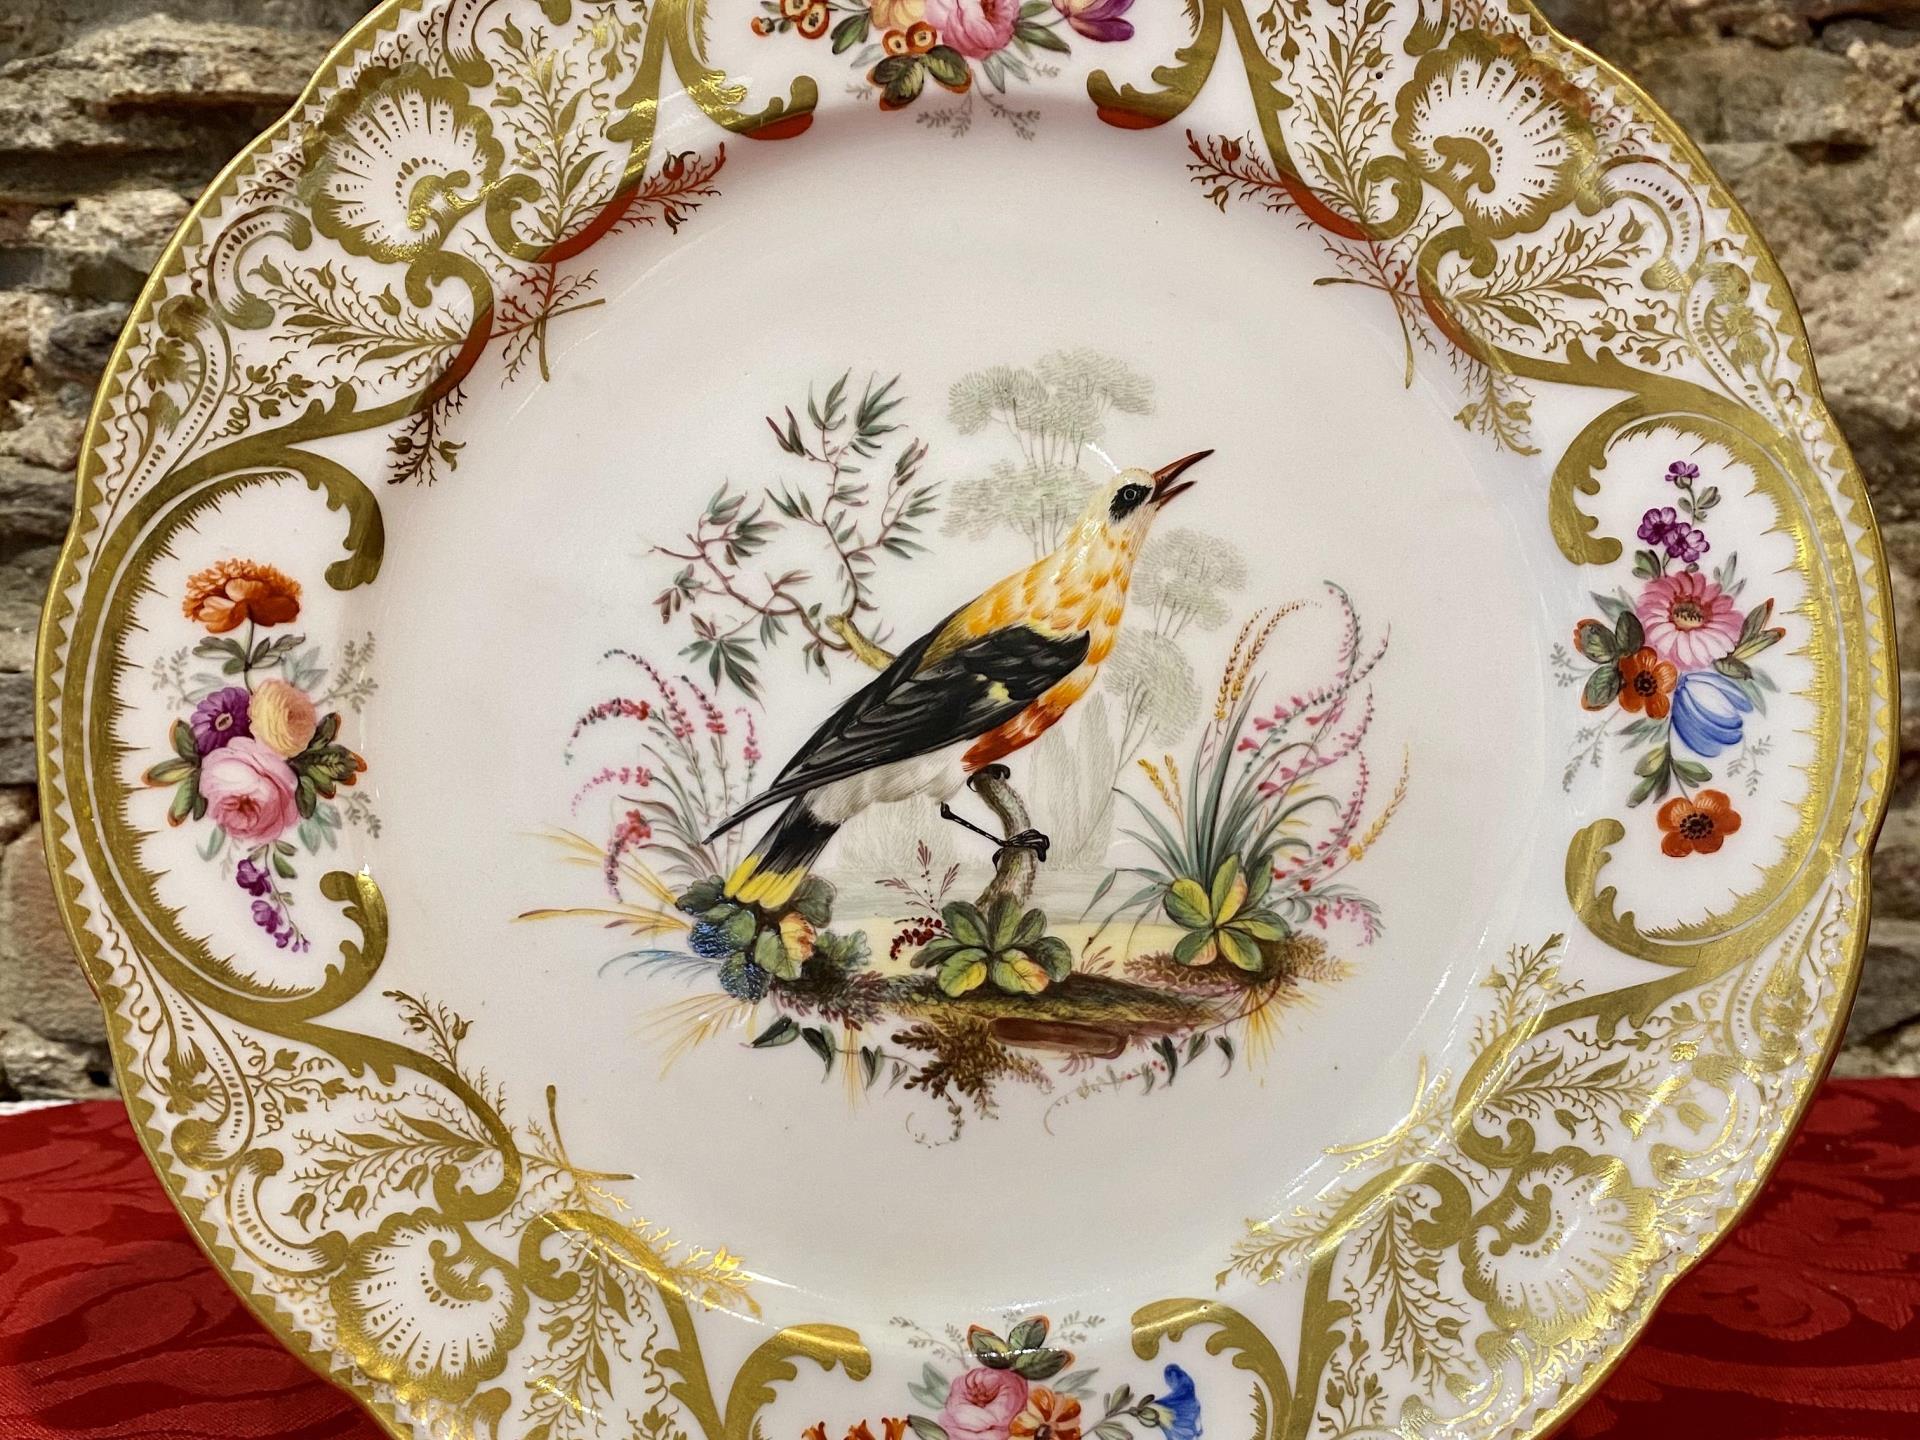 Nantgarw Porcelain made onsite 1818